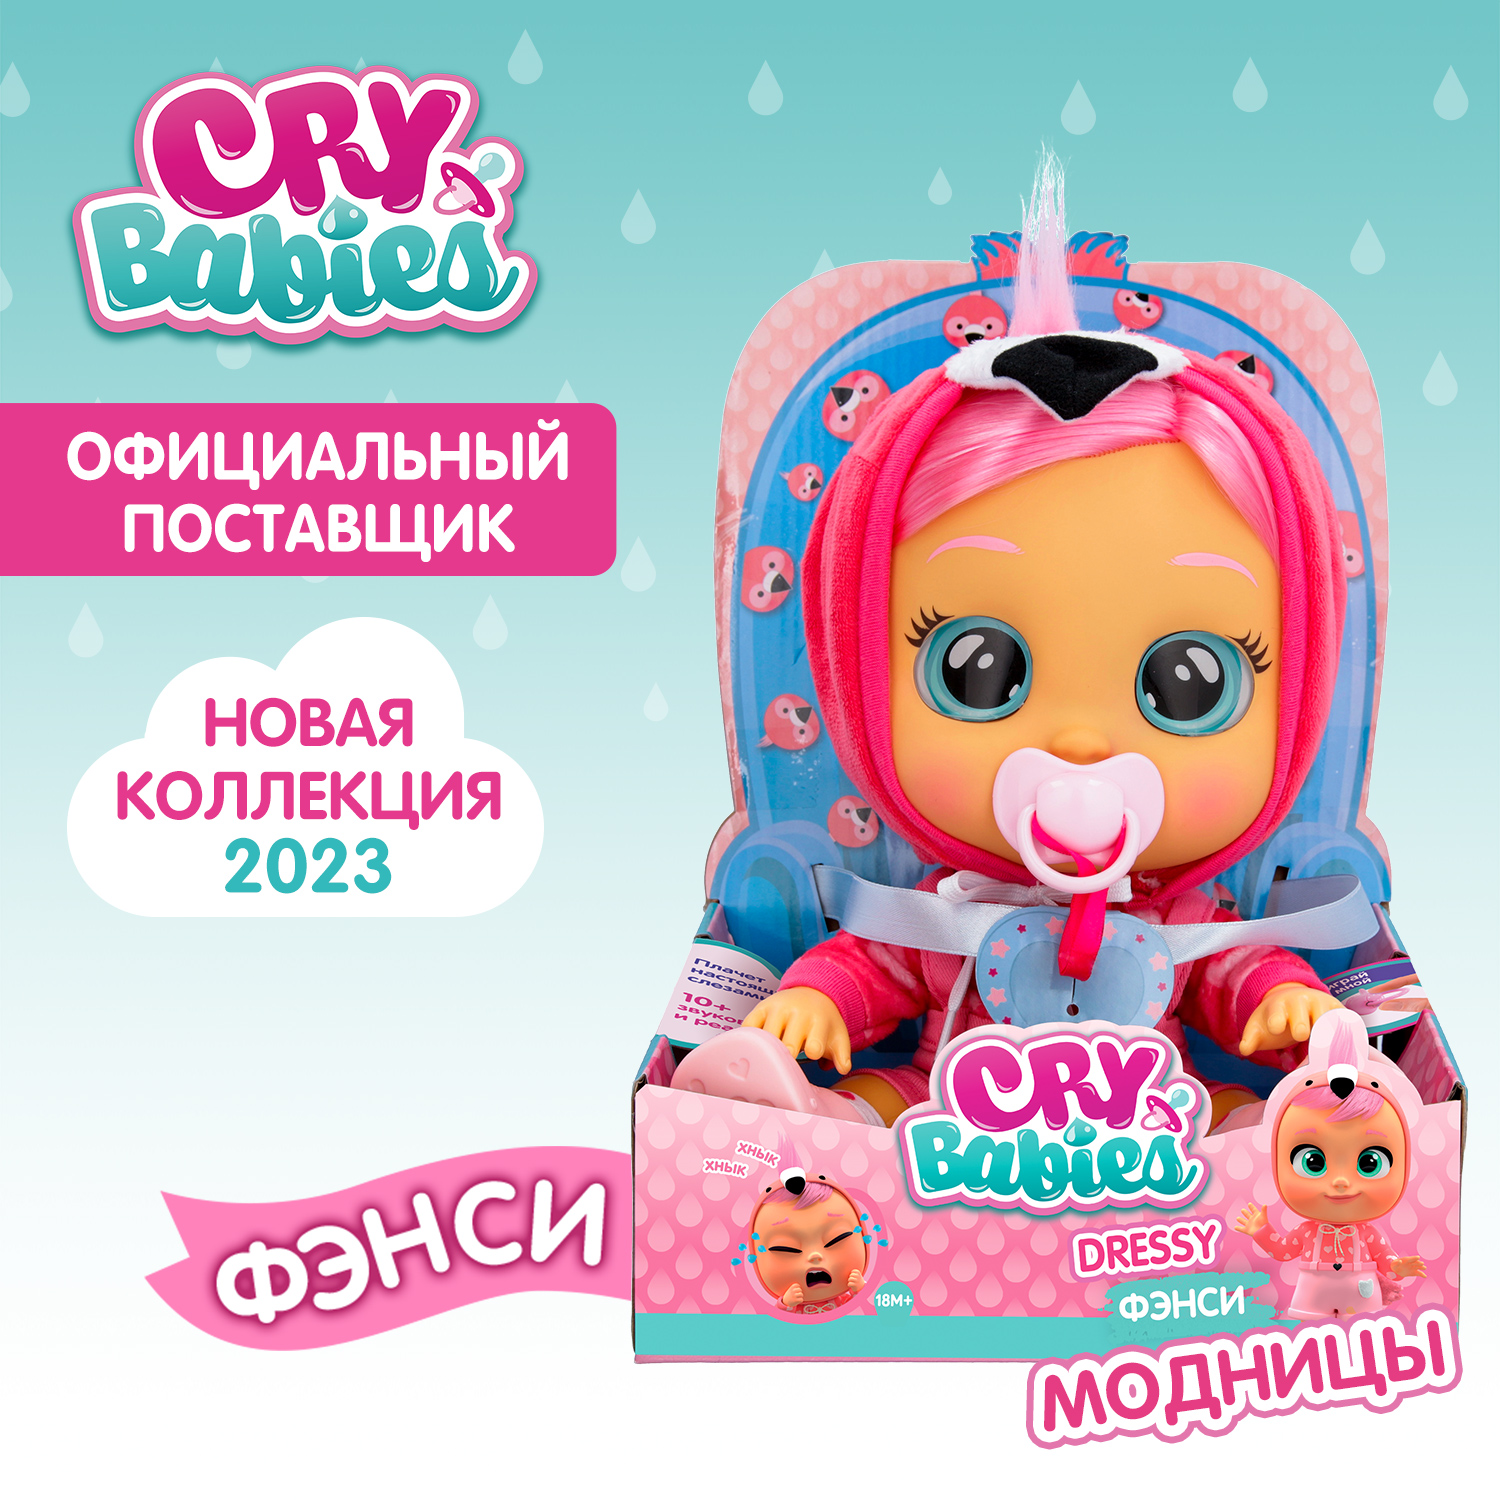 Кукла Cry Babies Фэнси Модница, интерактивная, плачущая, 40886